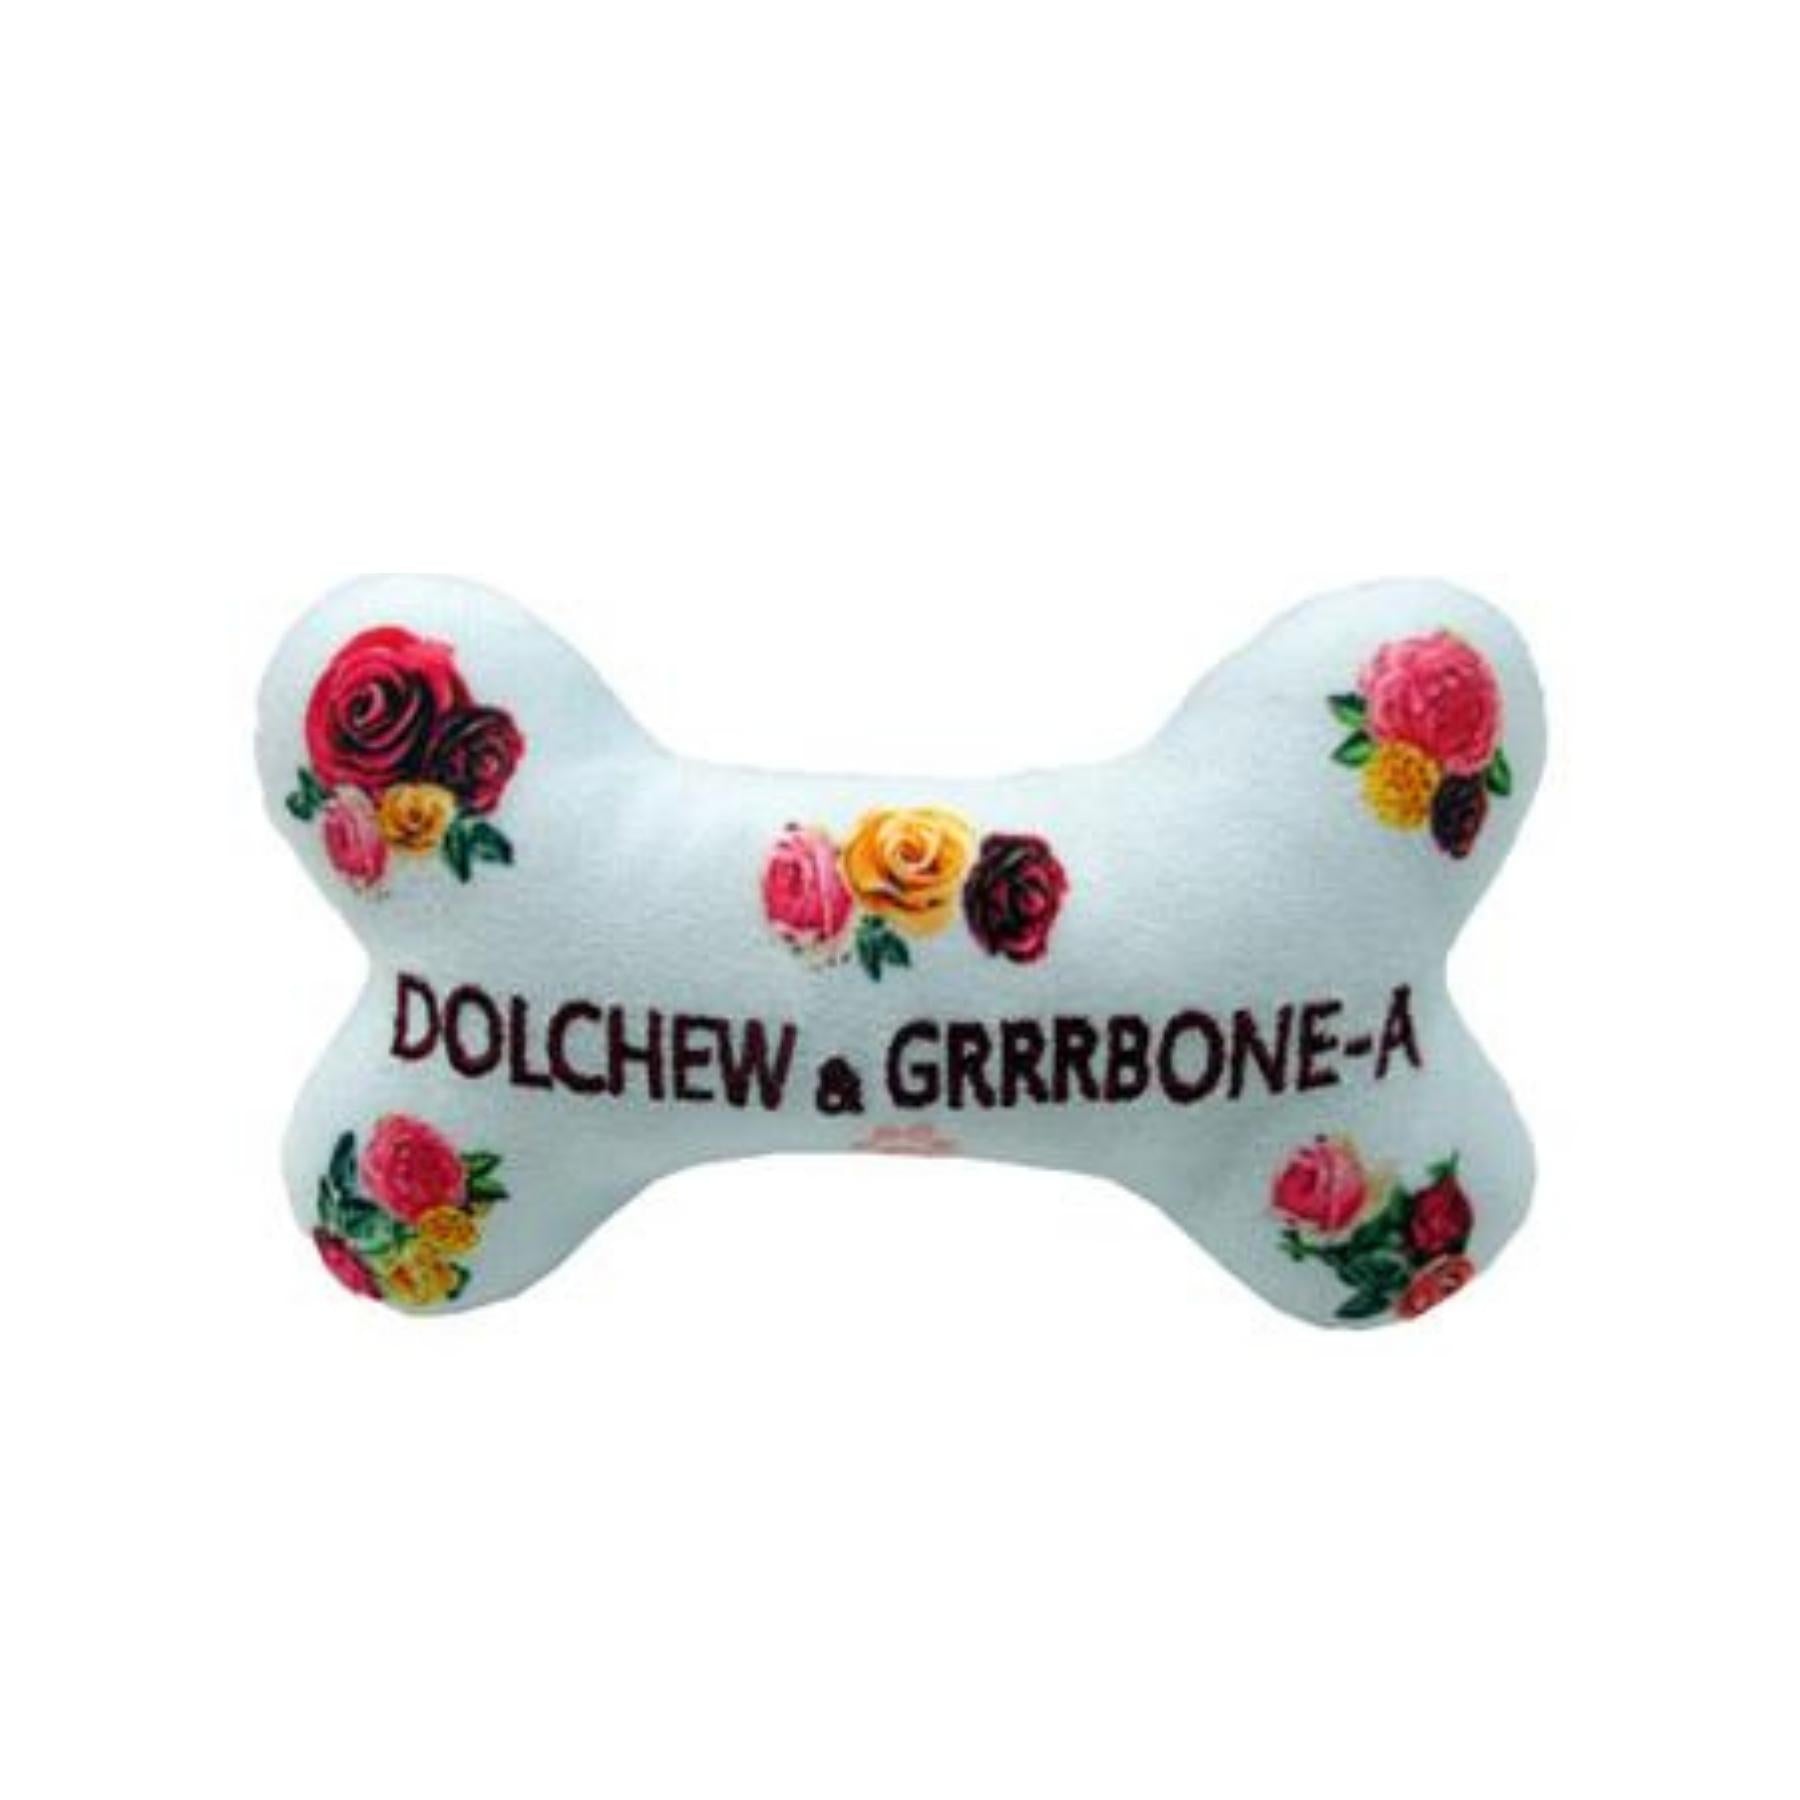 Dolchew & Grrrbone-A Bone - Pooch Luxury